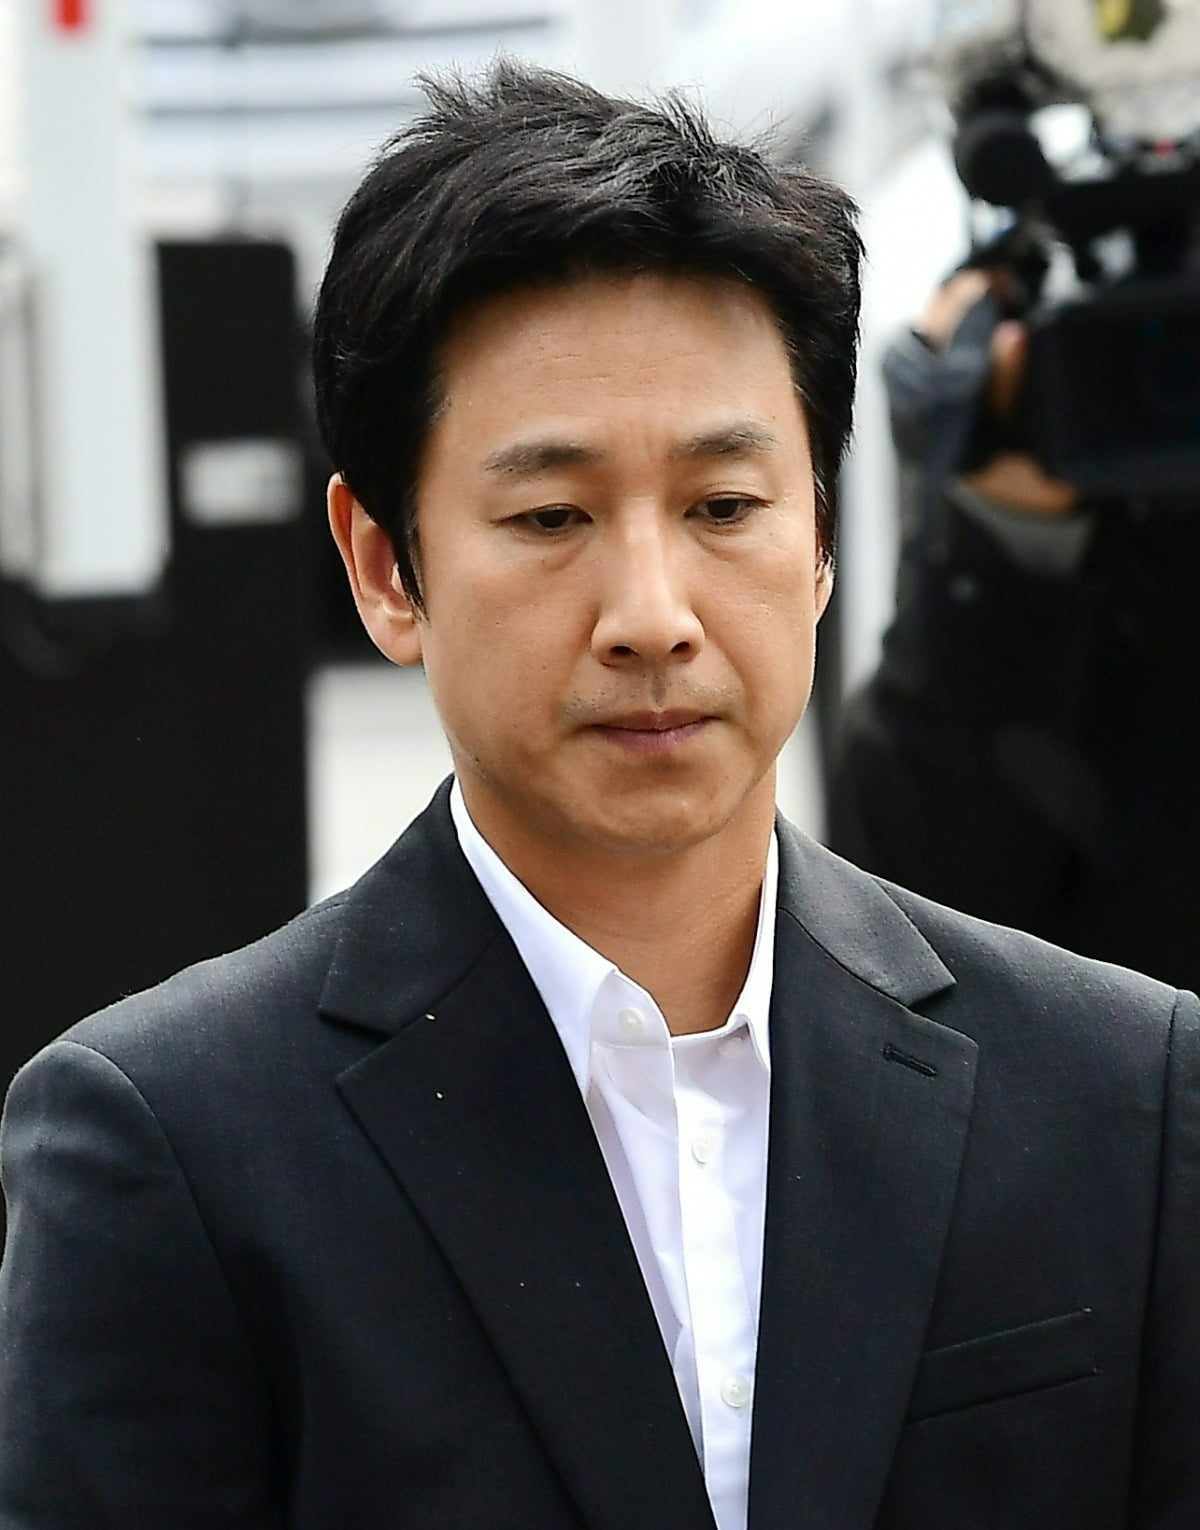 Police "Dead man identified as actor Lee Sun-kyun"